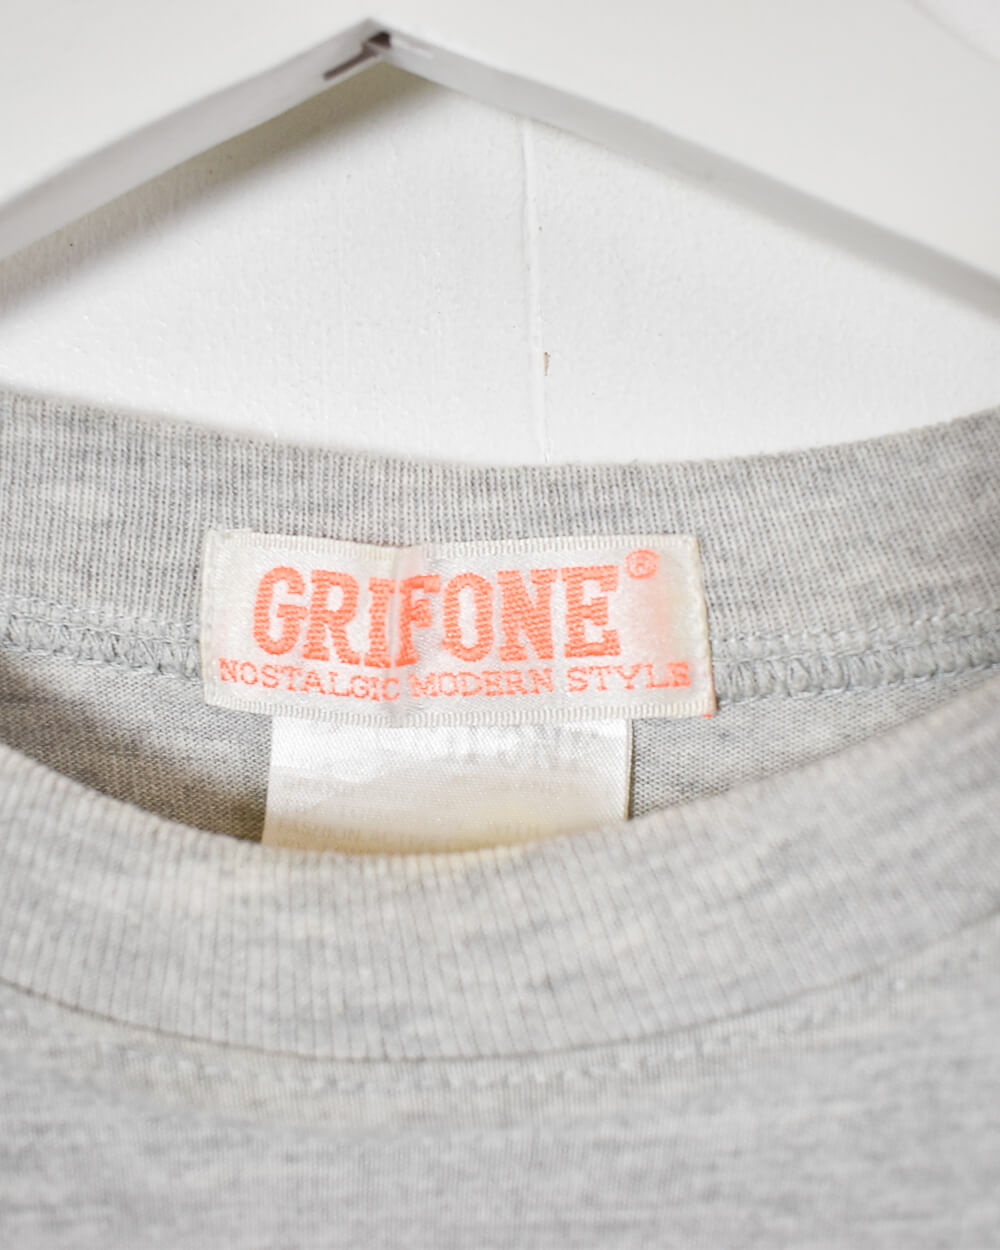 Stone Grifone Chicago Bulls T-Shirt - Medium